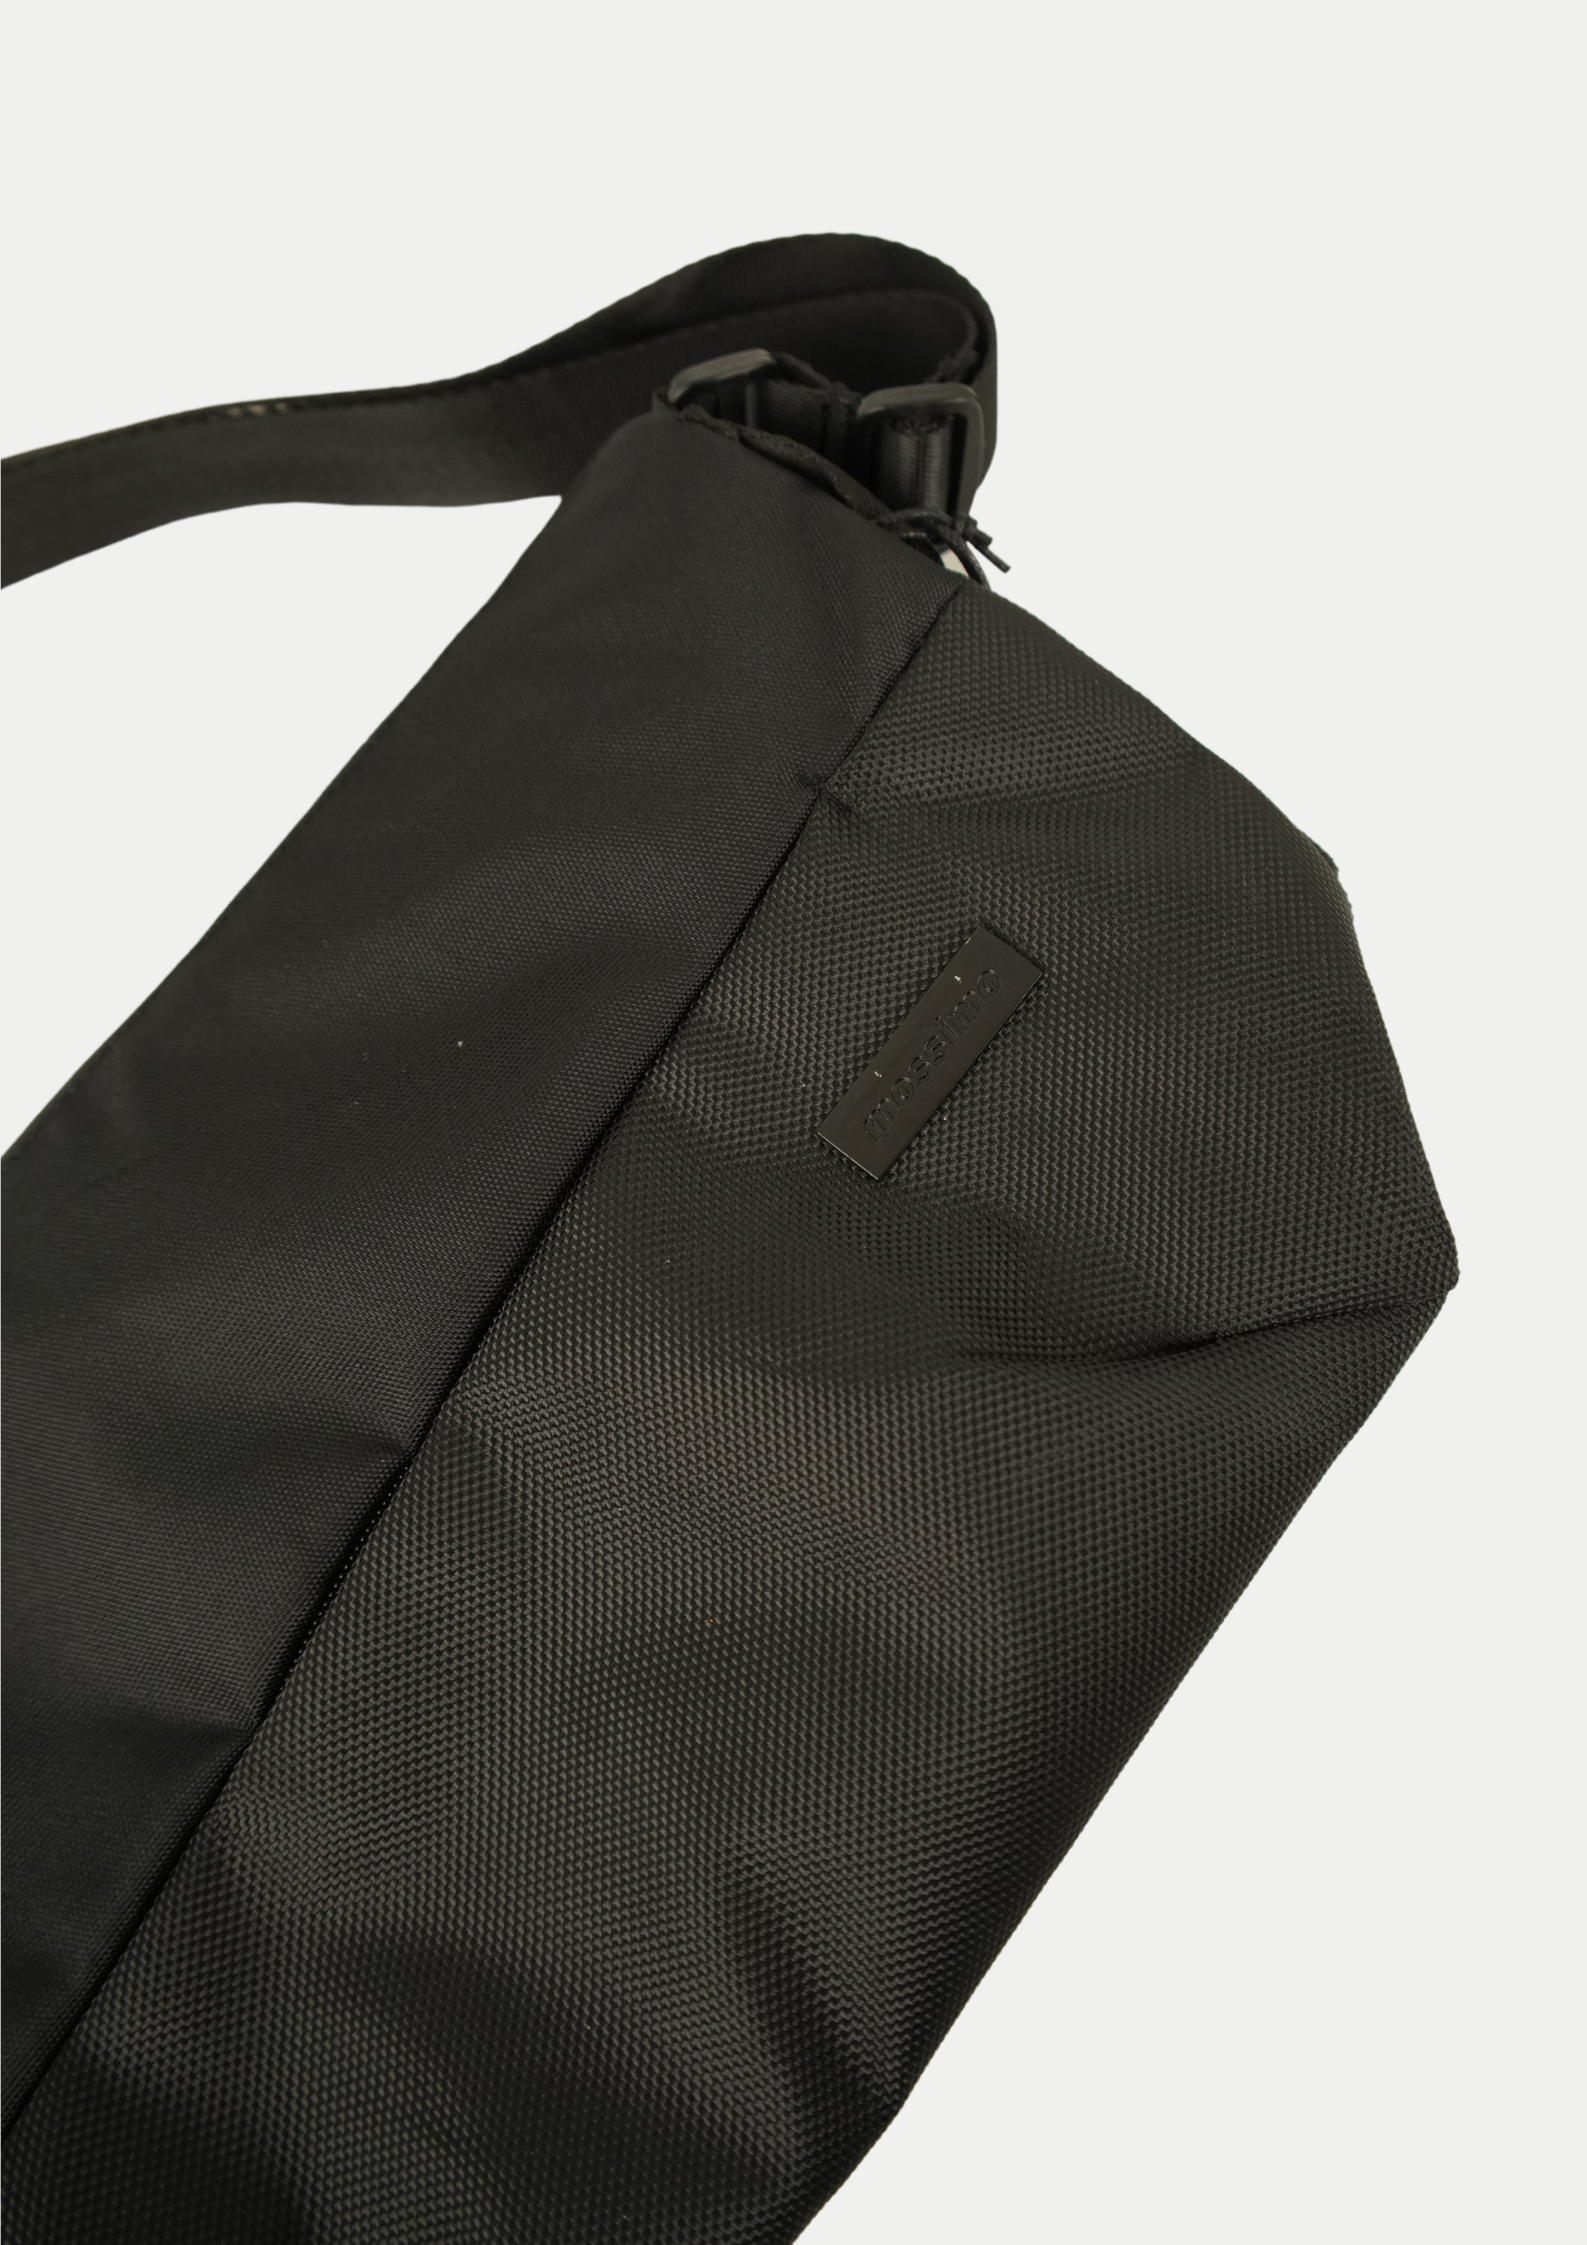 Mossimo Richmond Black Shoulder Bag